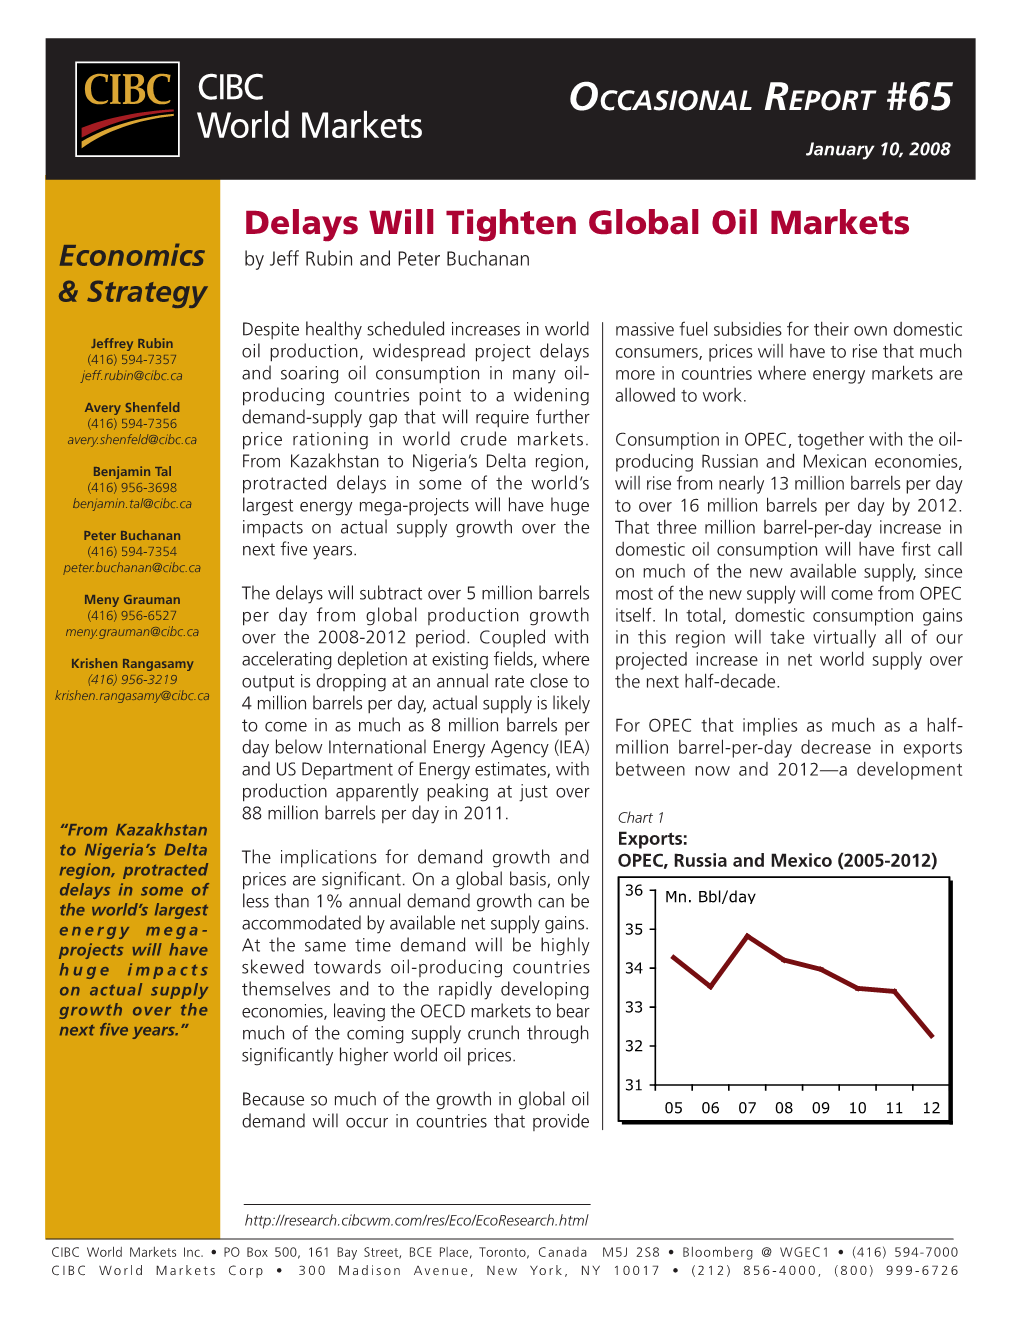 Delays Will Tighten Global Oil Markets